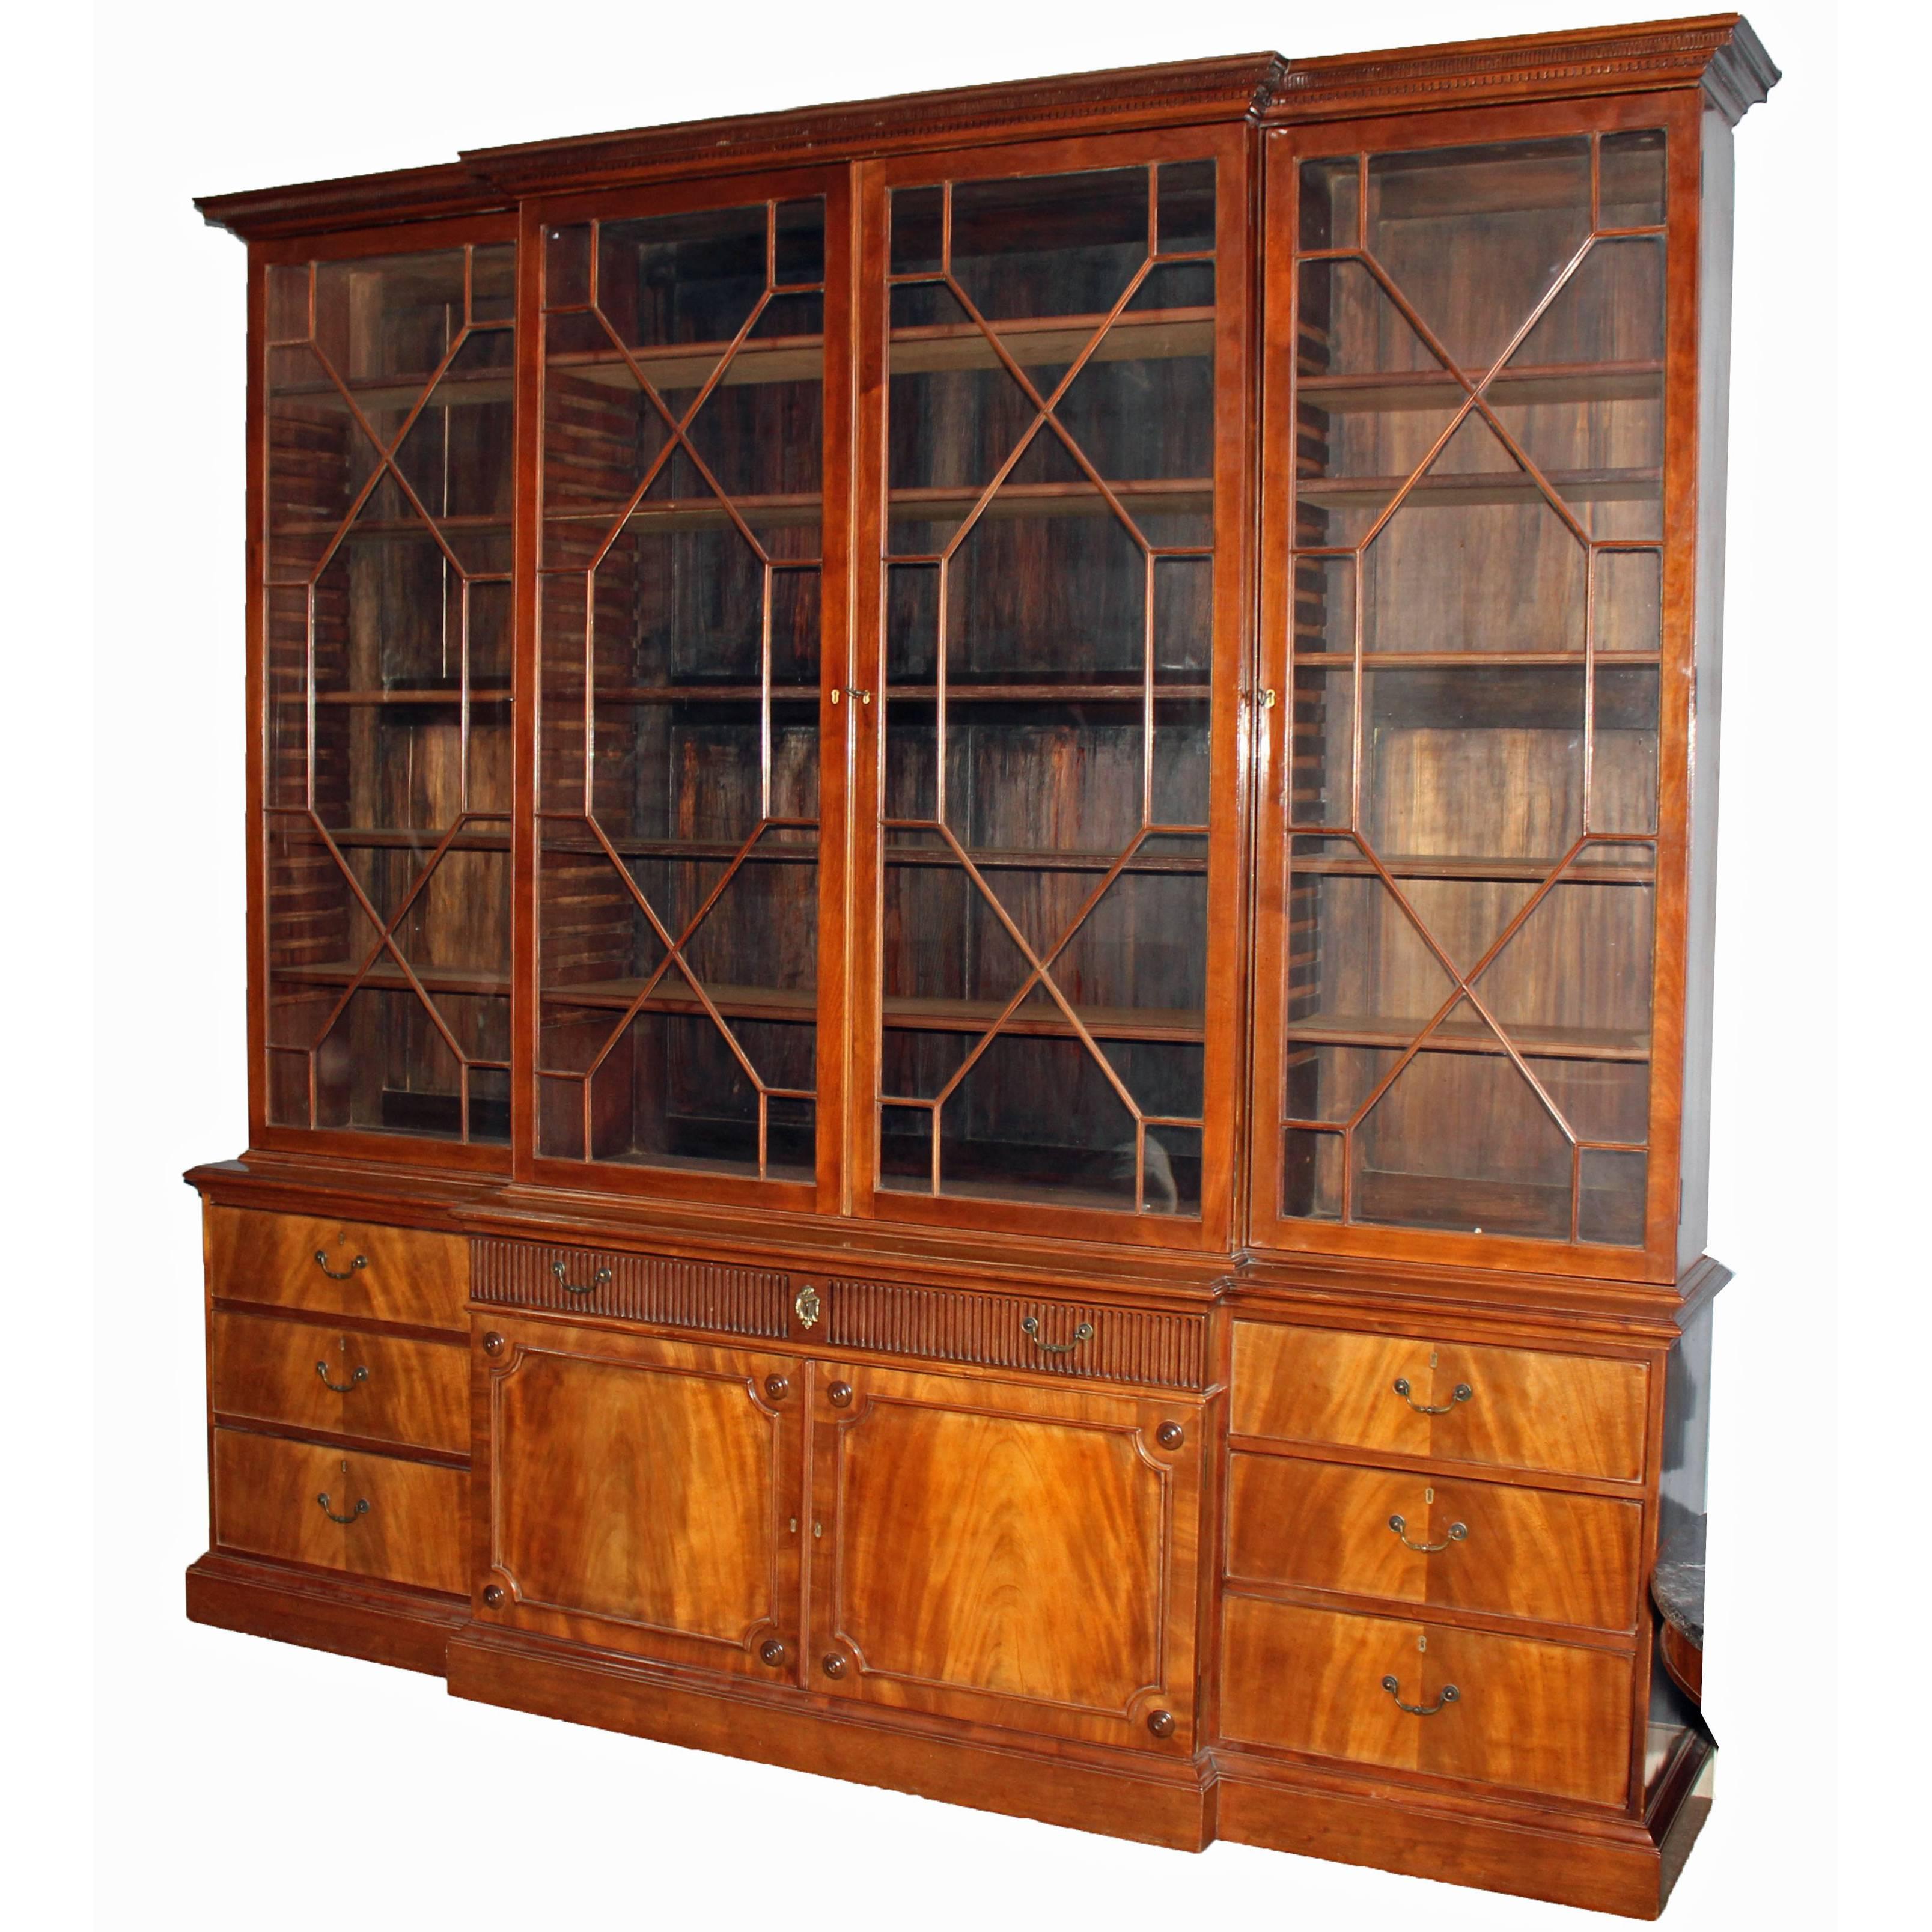 Maples & co George III design mahogany breakfront bookcase